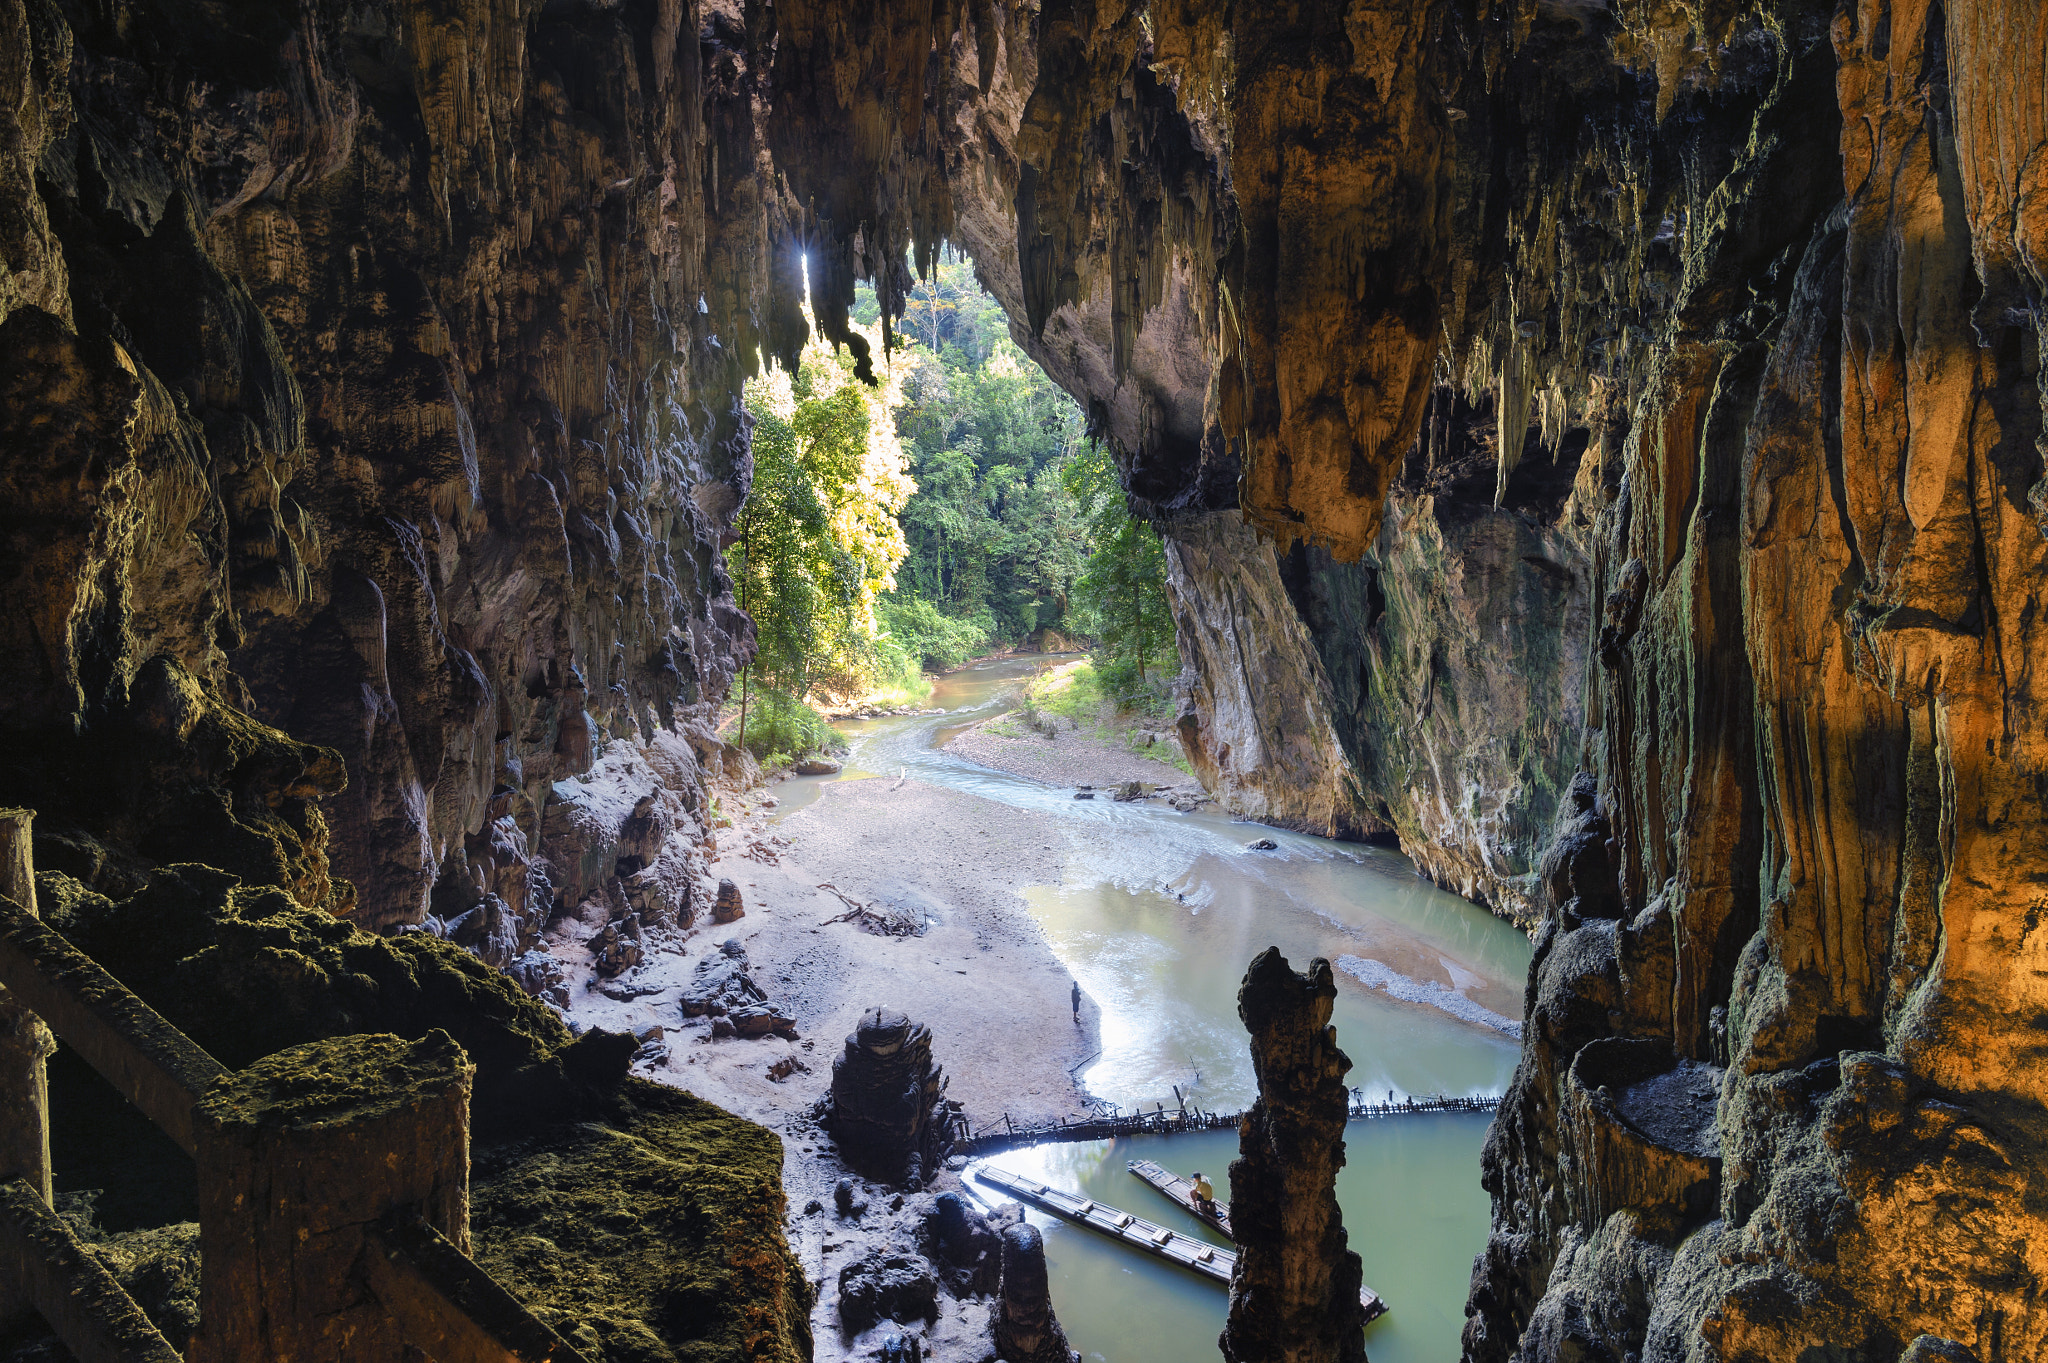 Nikon Df sample photo. Tham lod cave, maehongson, thailand photography